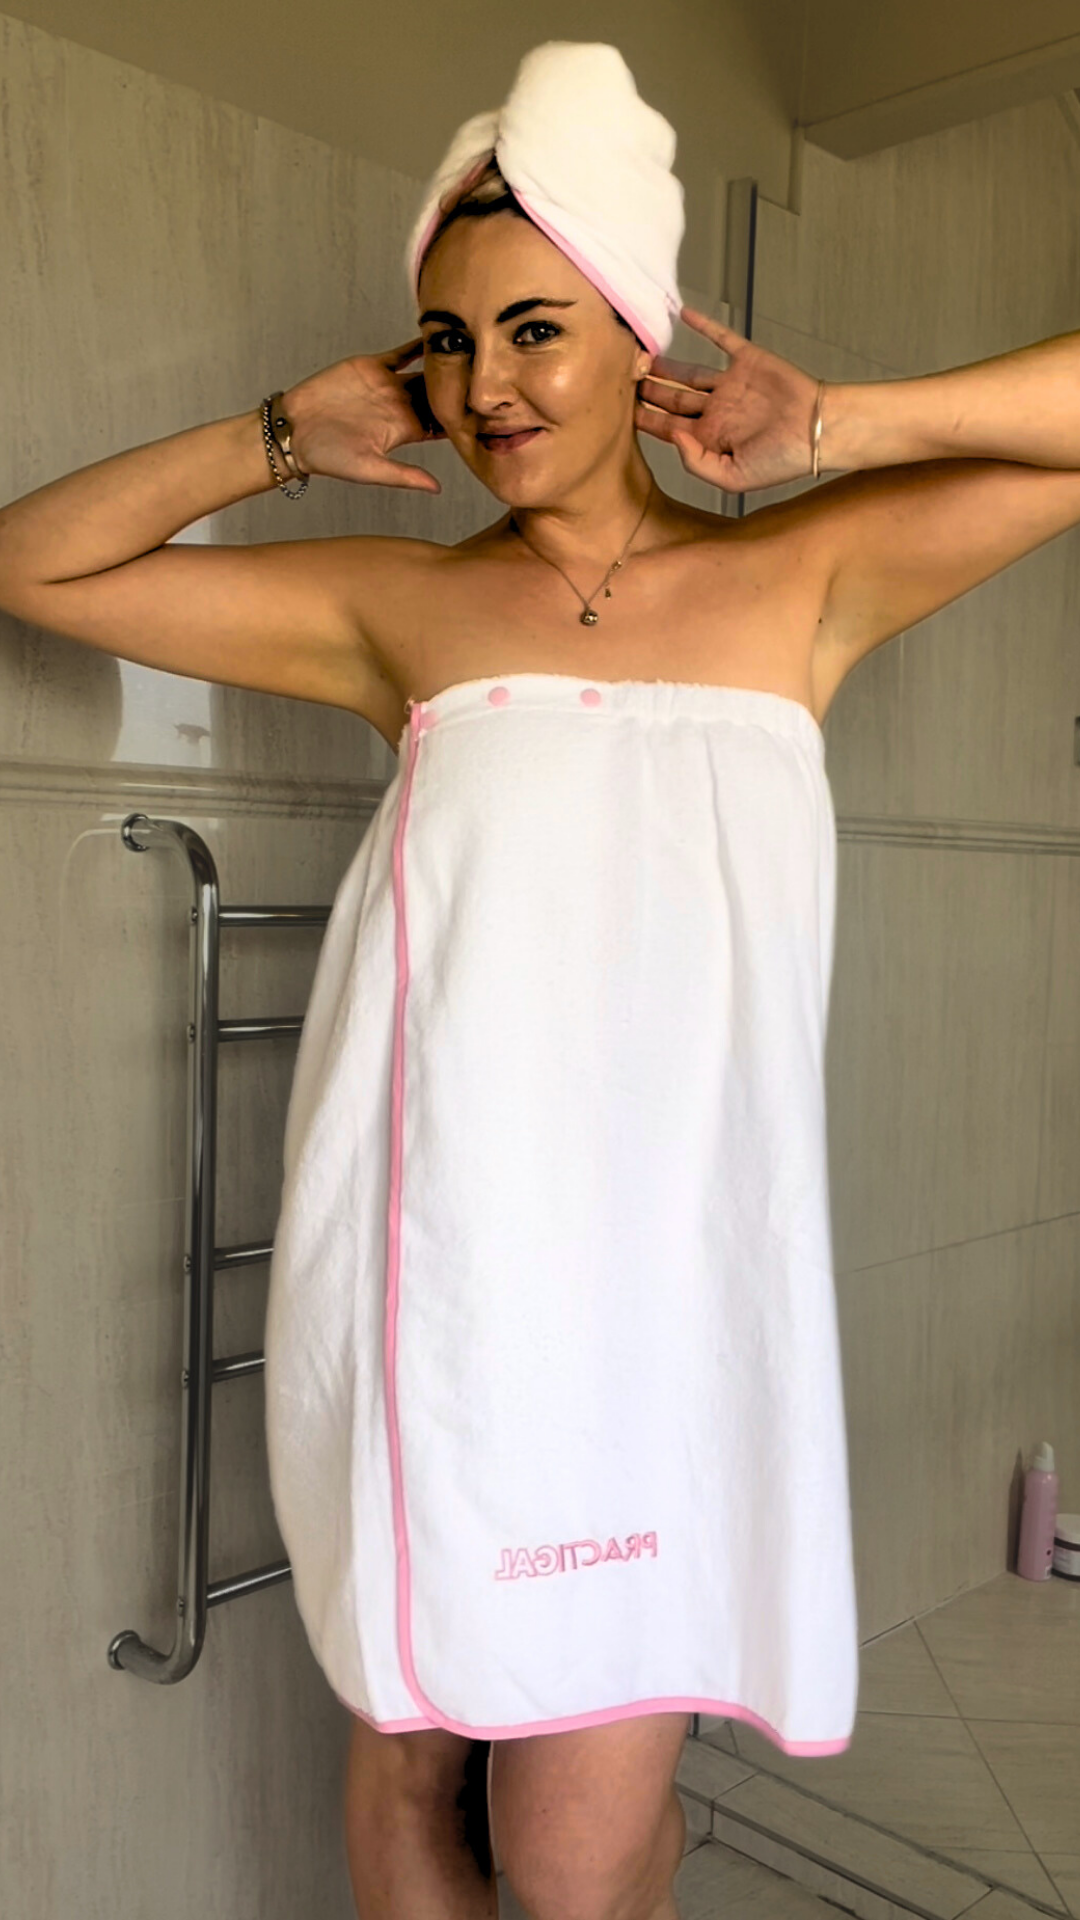 practigal towel dress. christina thompson wearing practigals towel dress